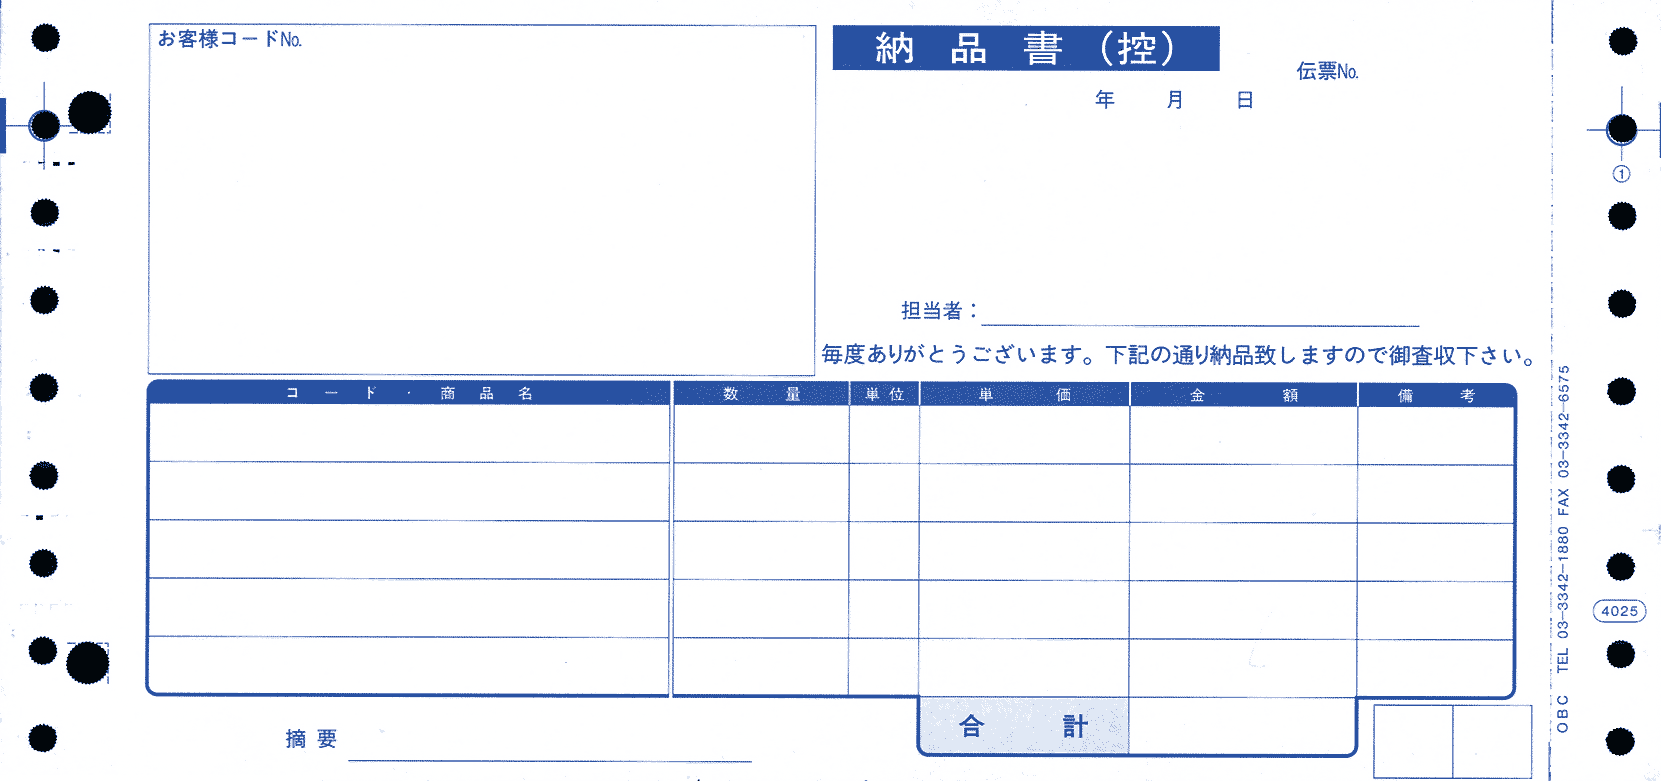 OBC 奉行サプライ4126 単票明細請求書1999枚 - rehda.com